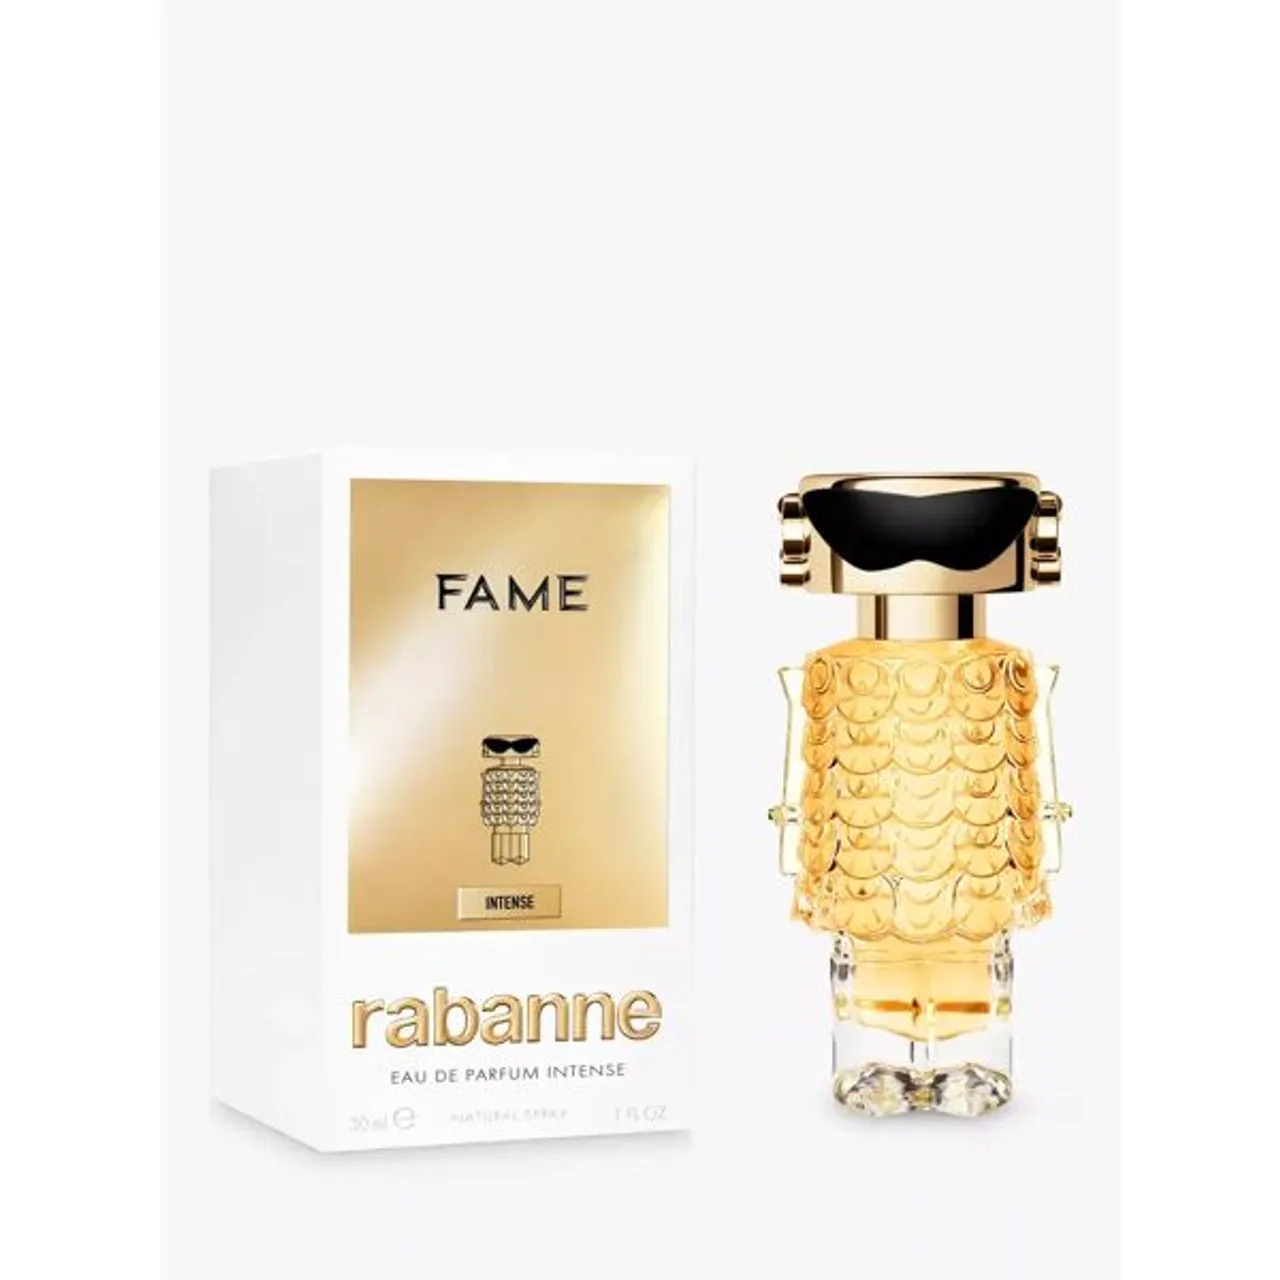 Rabanne FAME Intense Eau de Parfum Intense - Female - Size: 30ml